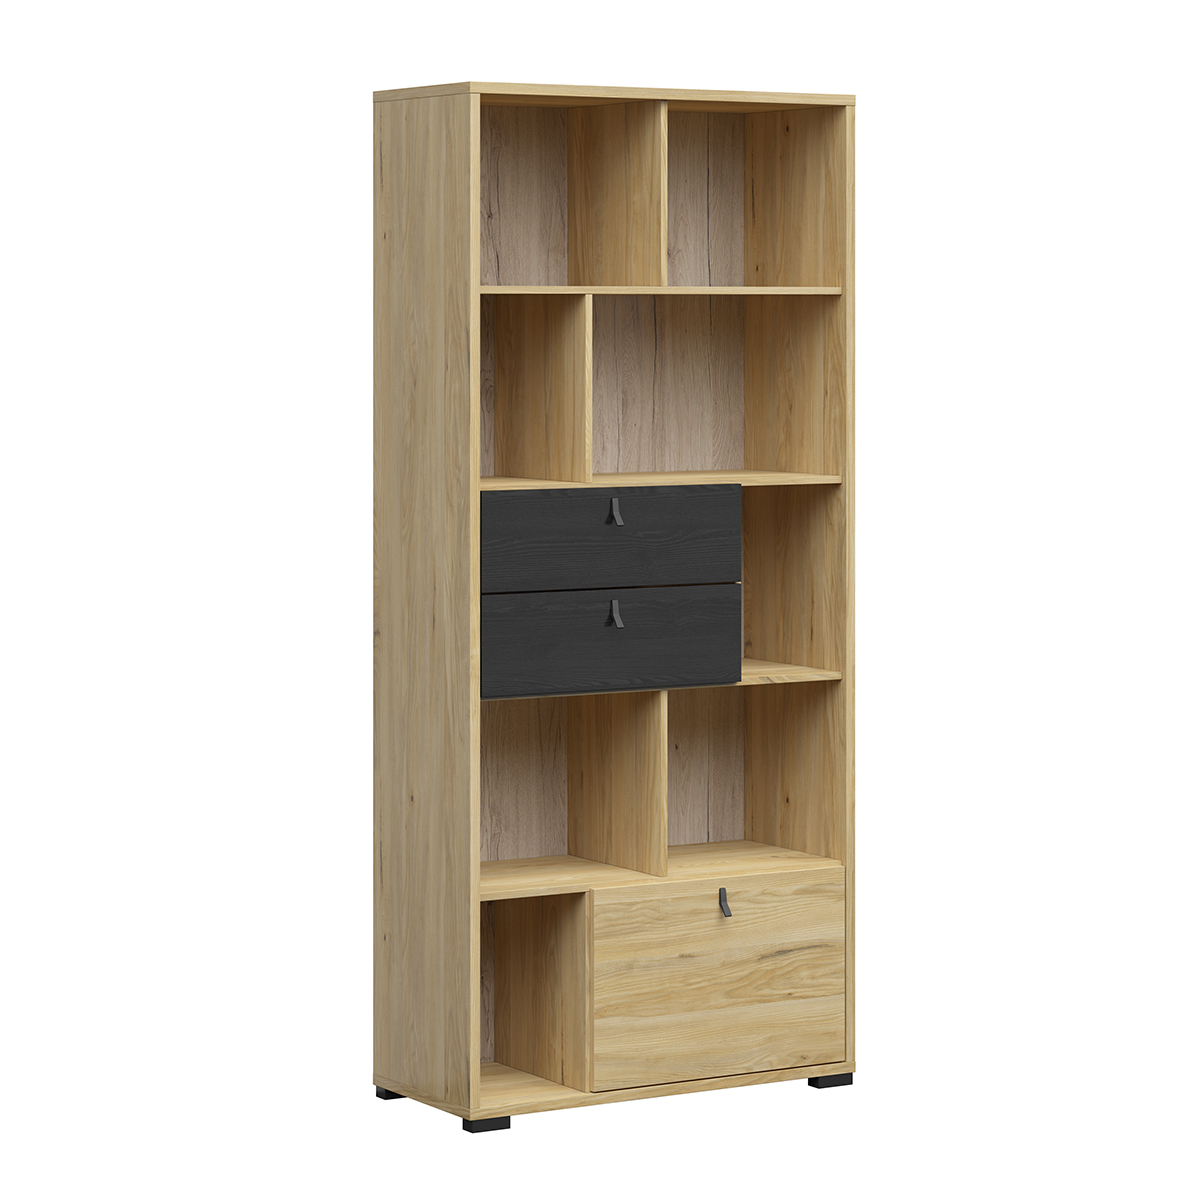 petits-meubles-dena-S462_REG1K2S_JBE_DCA-bibliotheque-2-tiroirs_2